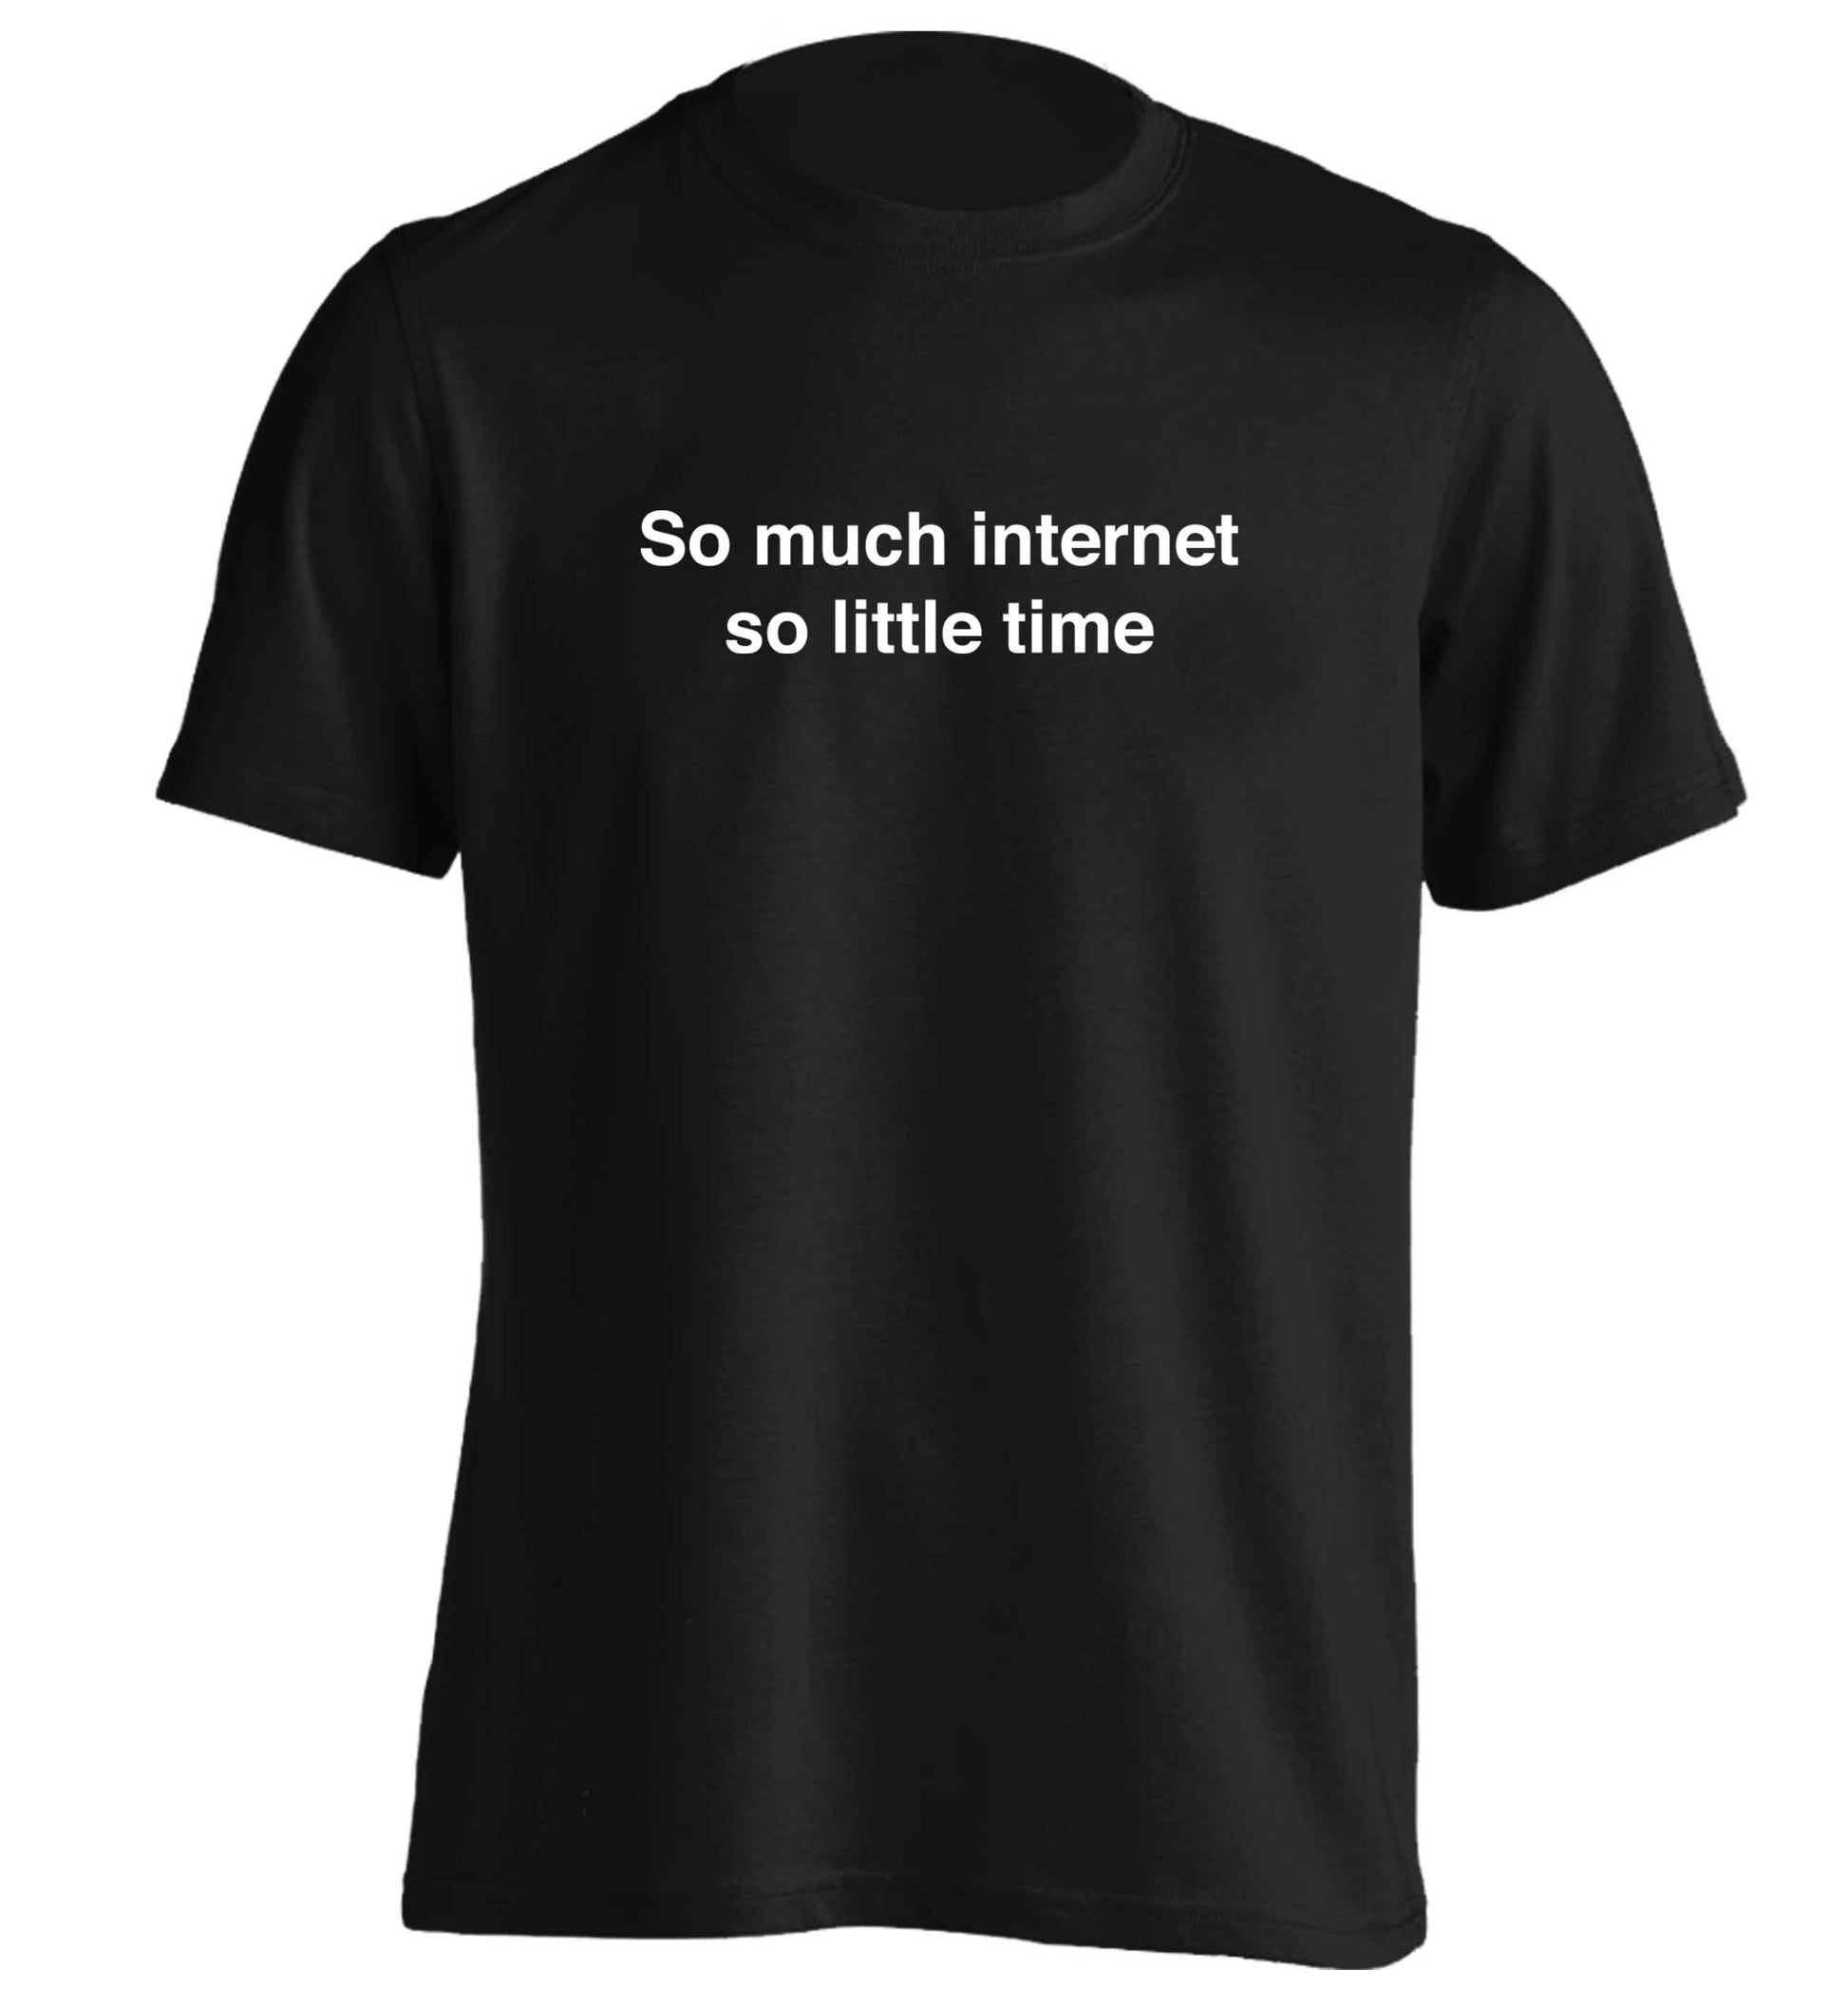 So much internet so little time adults unisex black Tshirt 2XL